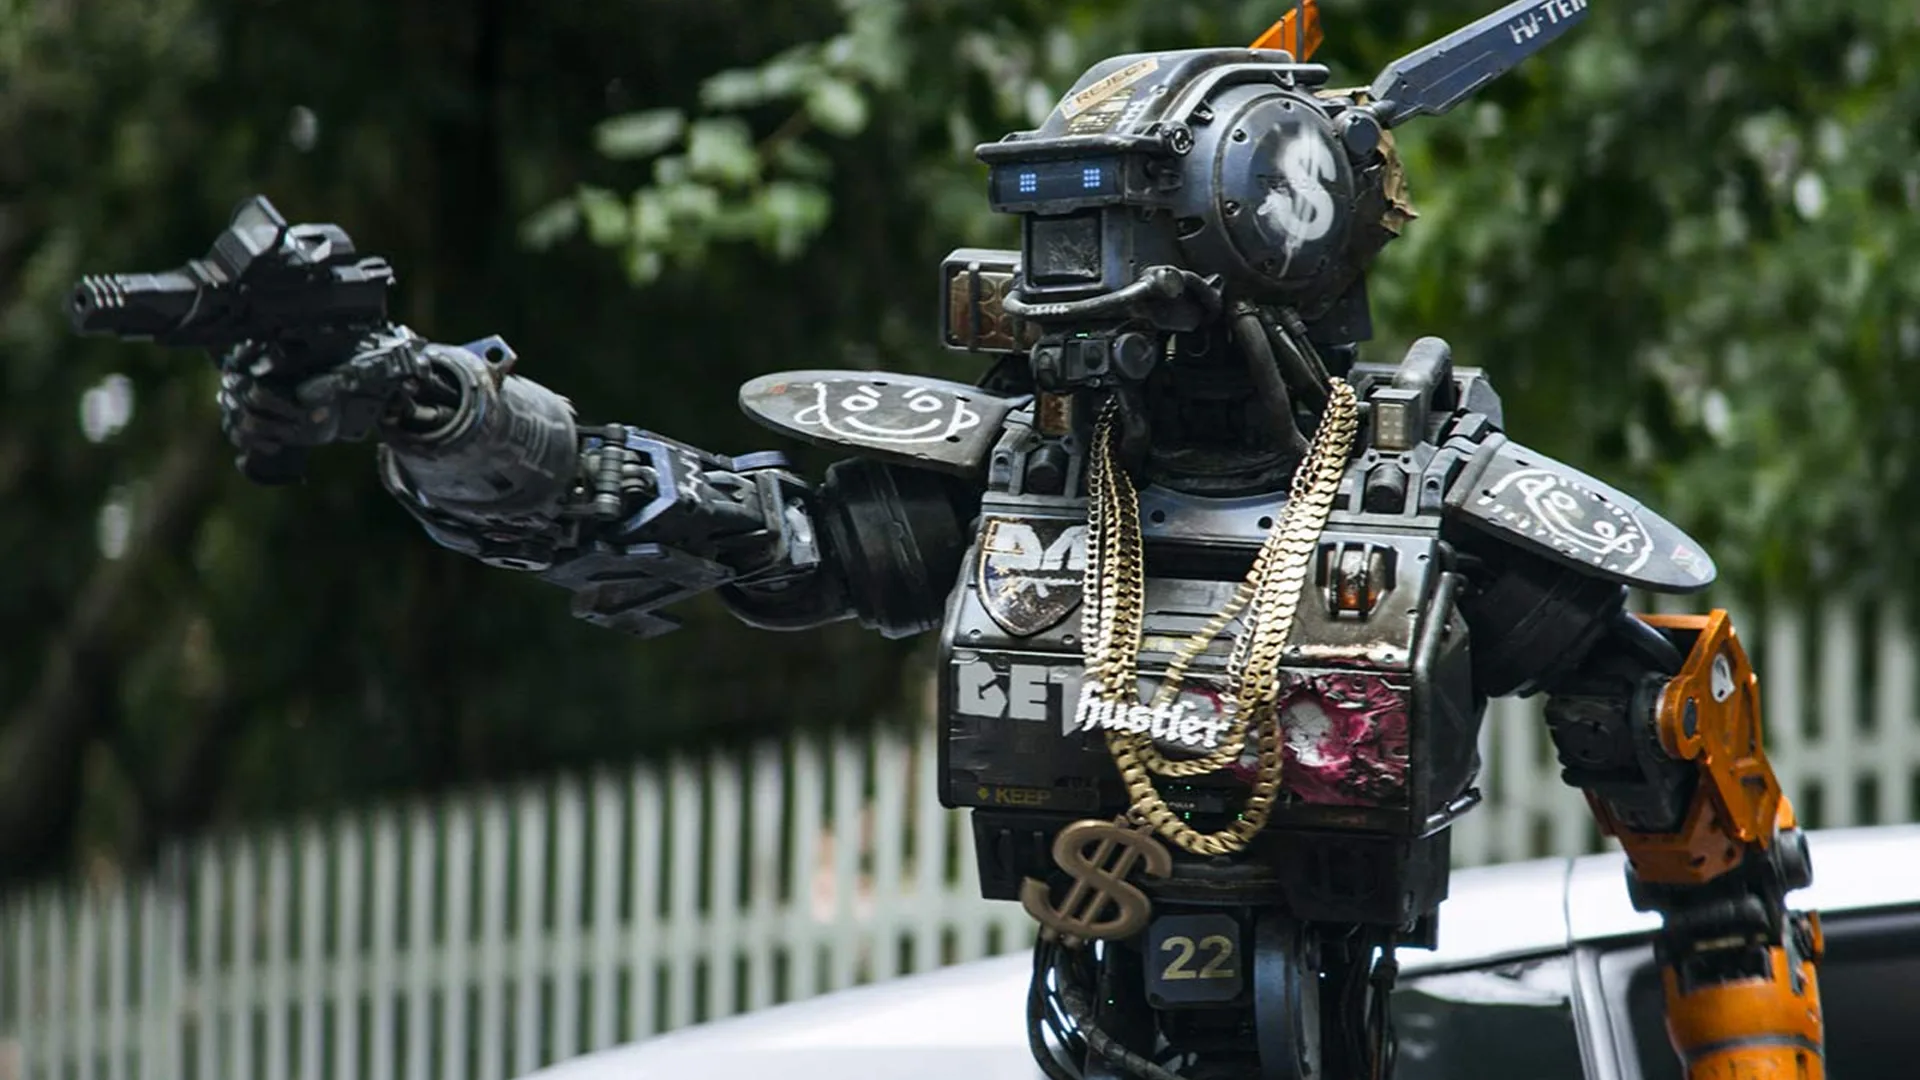 chappie robot de inteligencia artificial